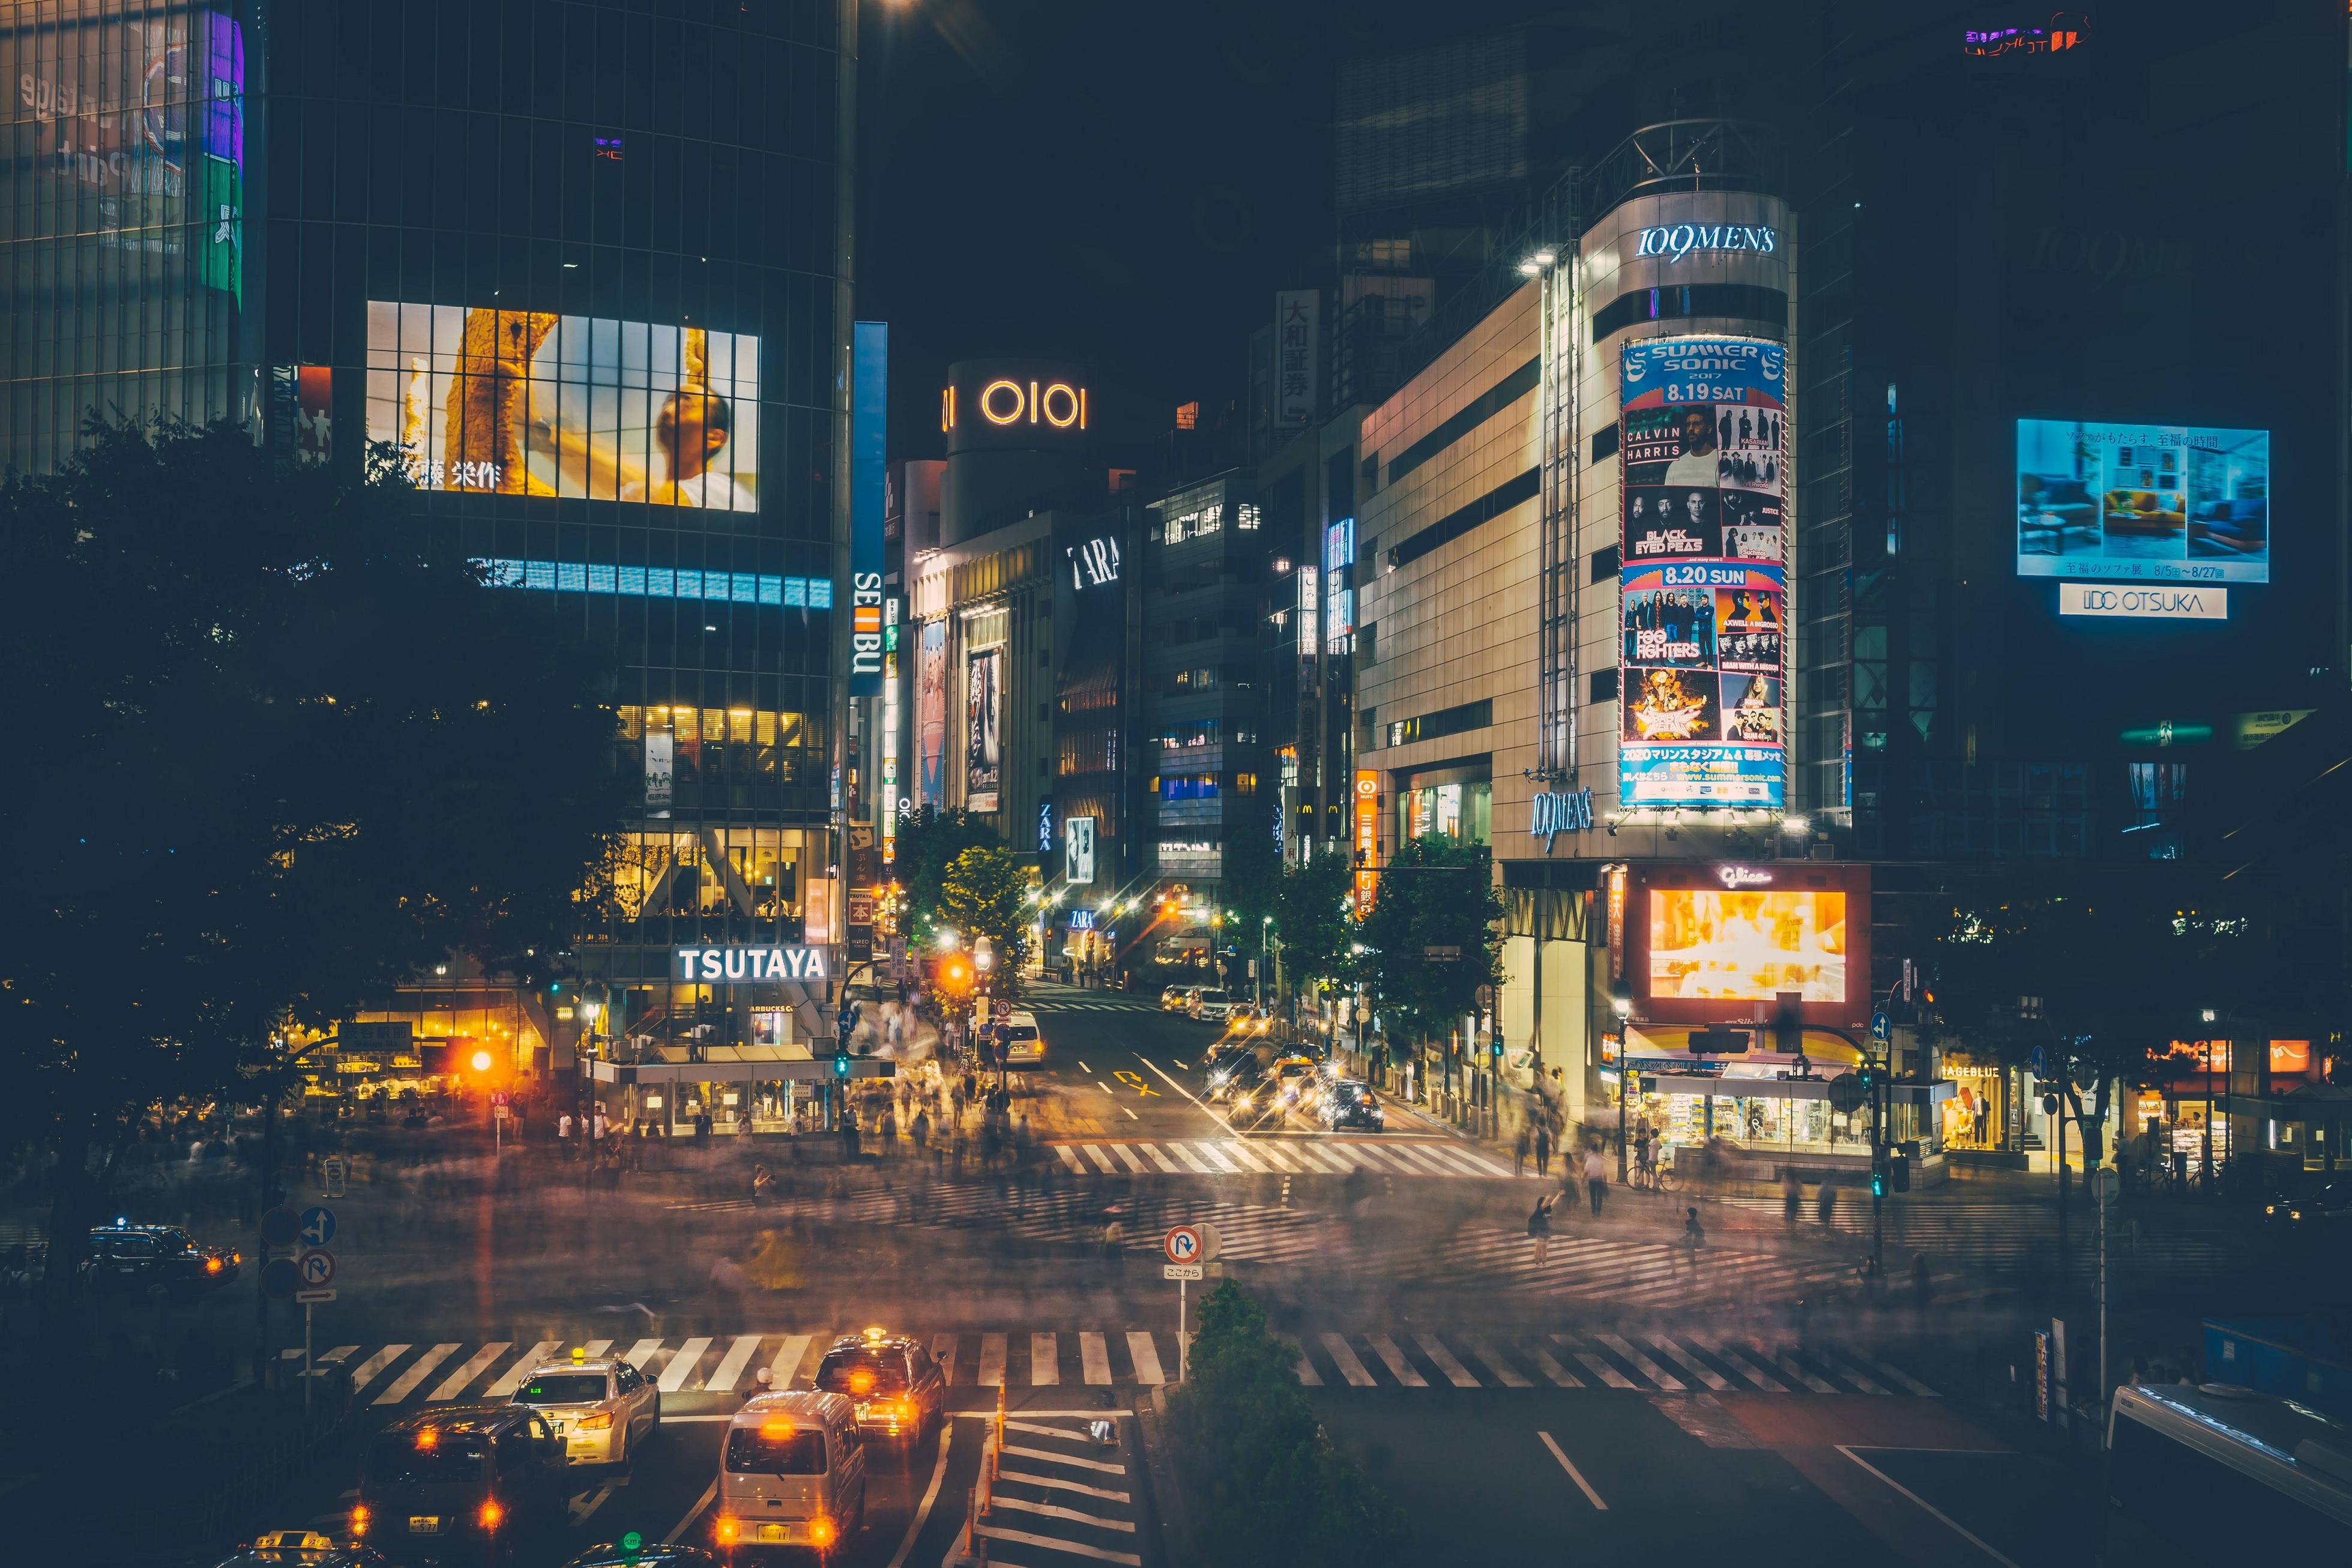 OC][4898x3265] Tokyo, the city of lights - Imgur